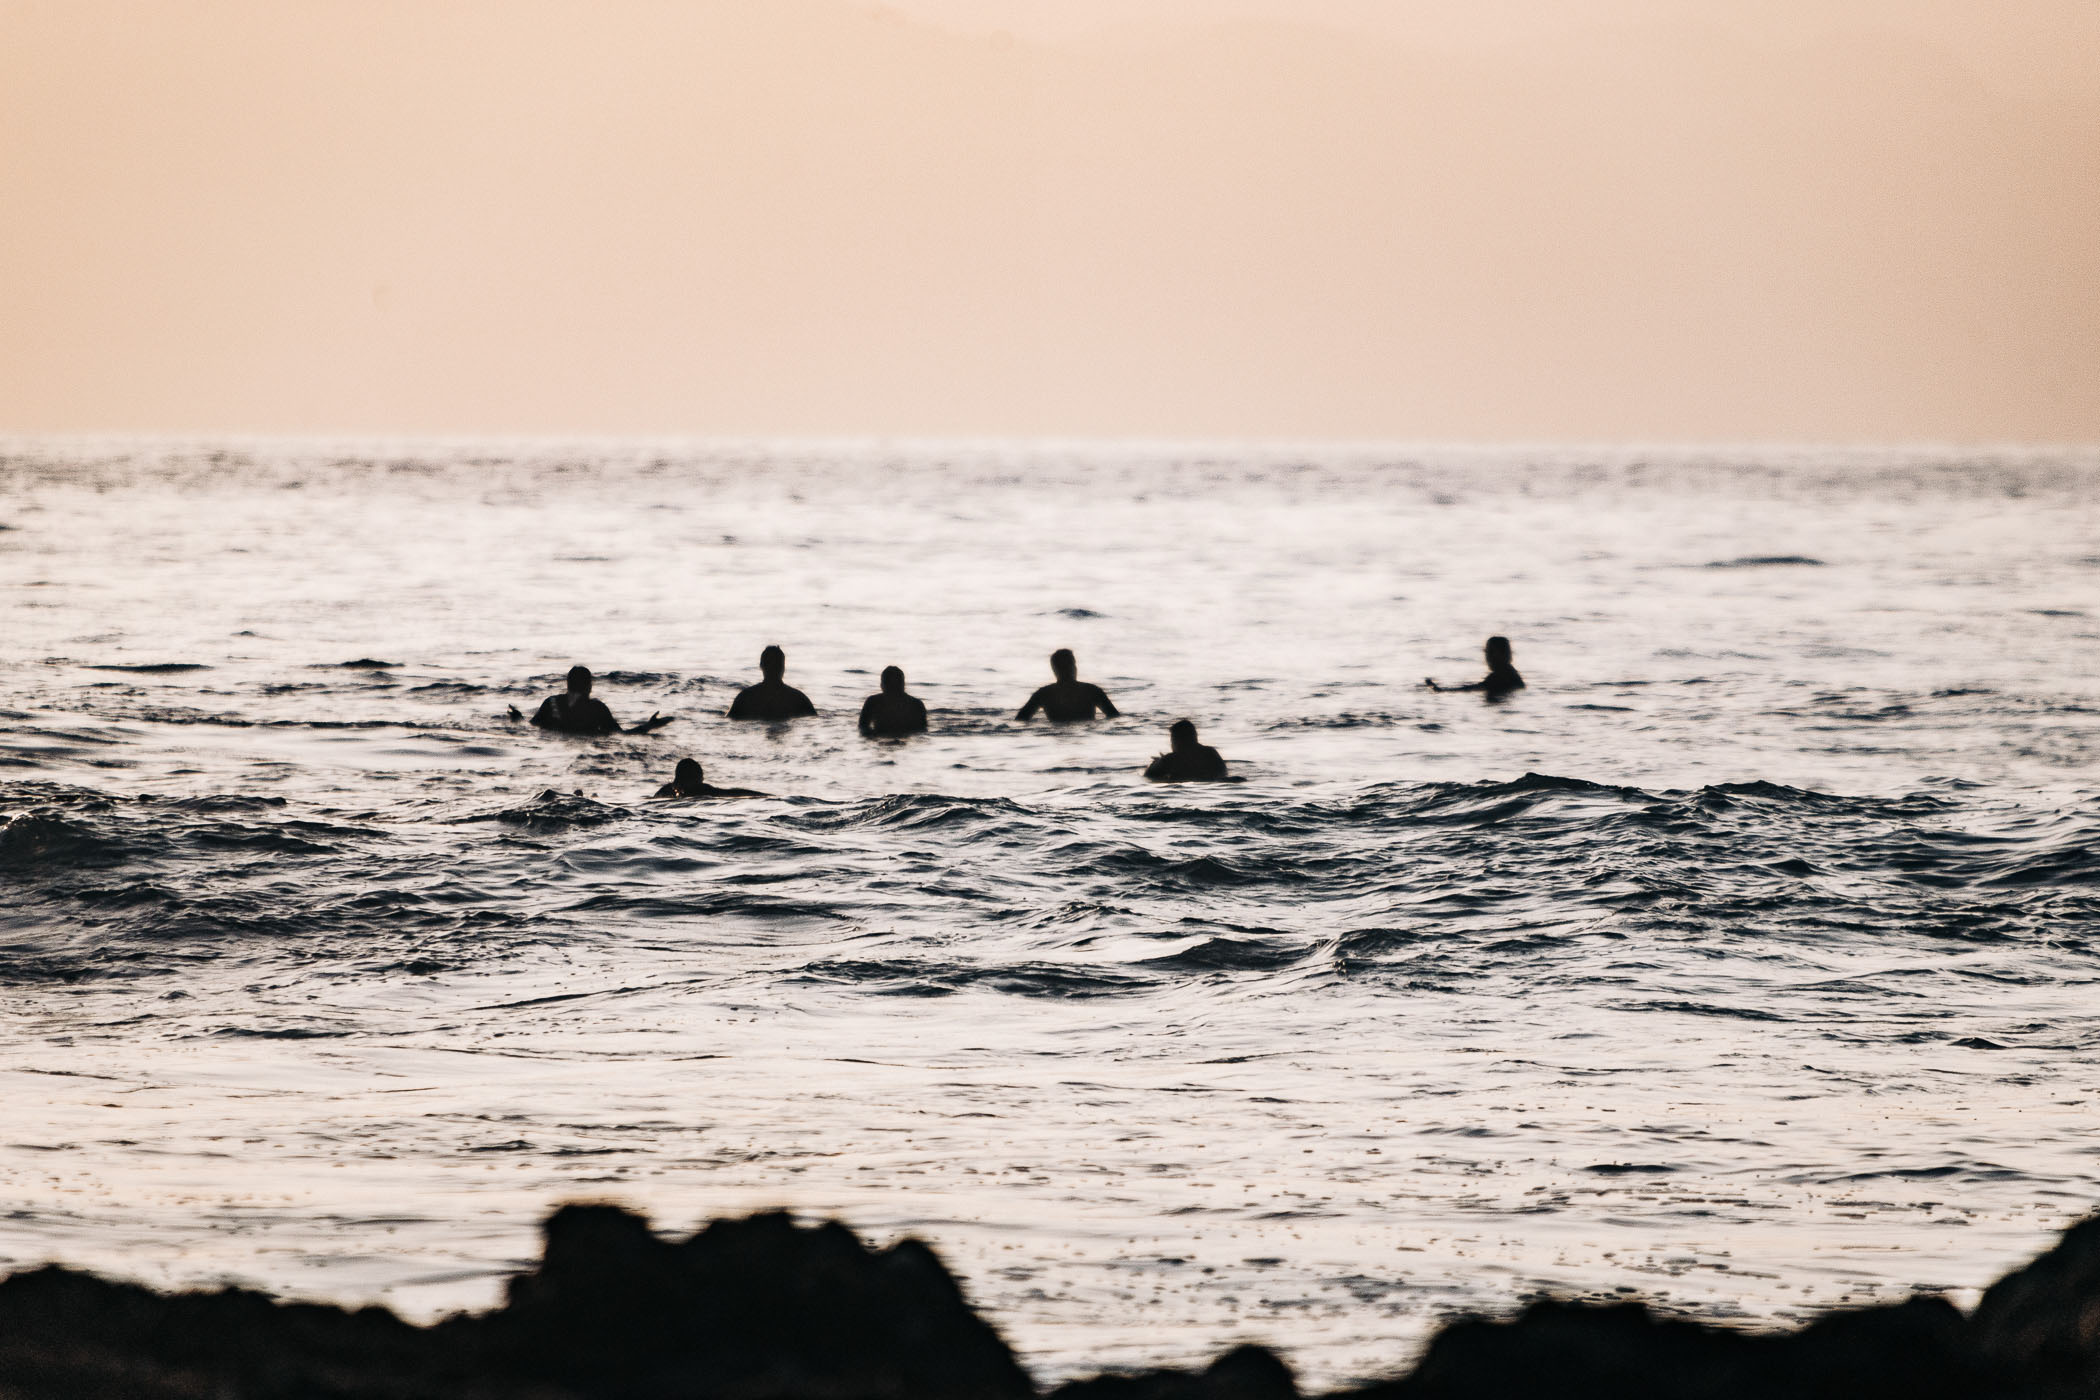 Surfing, Surfer, Tenerife, Teneriffa, Florian Kresse, Welle, Wellenreiten, Big Wave, Morning